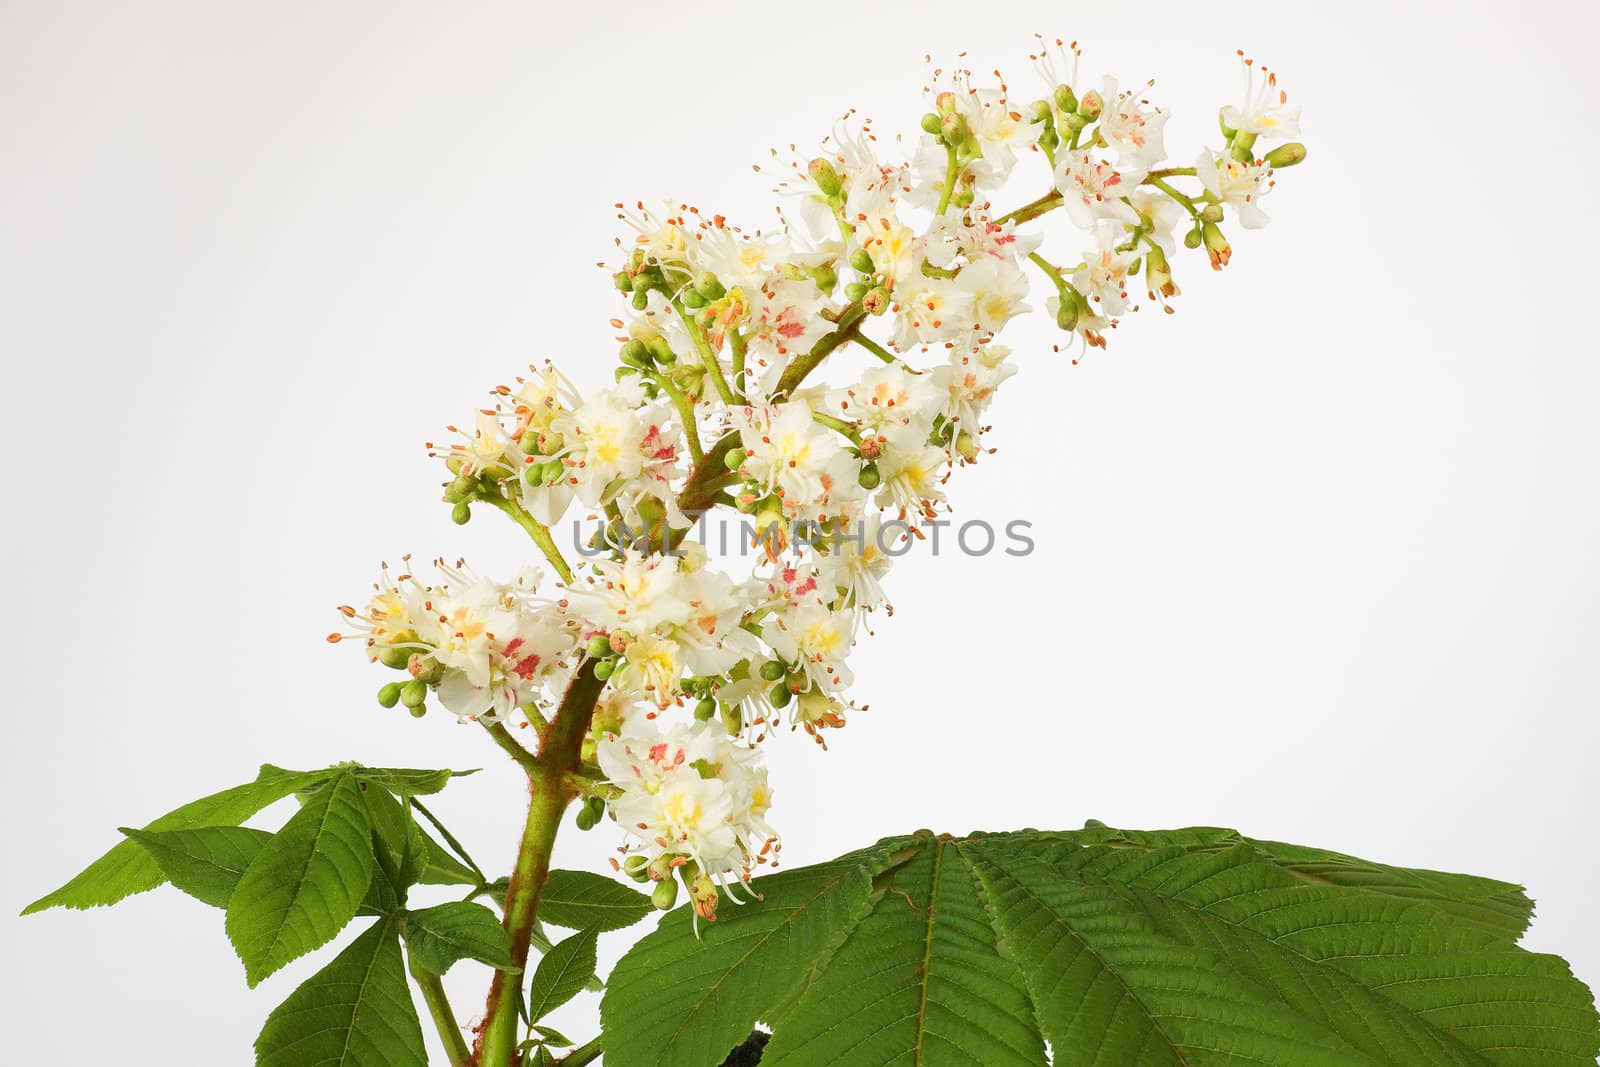 Aesculus hippocastanum (blossom of horse-chestnut tree) on white